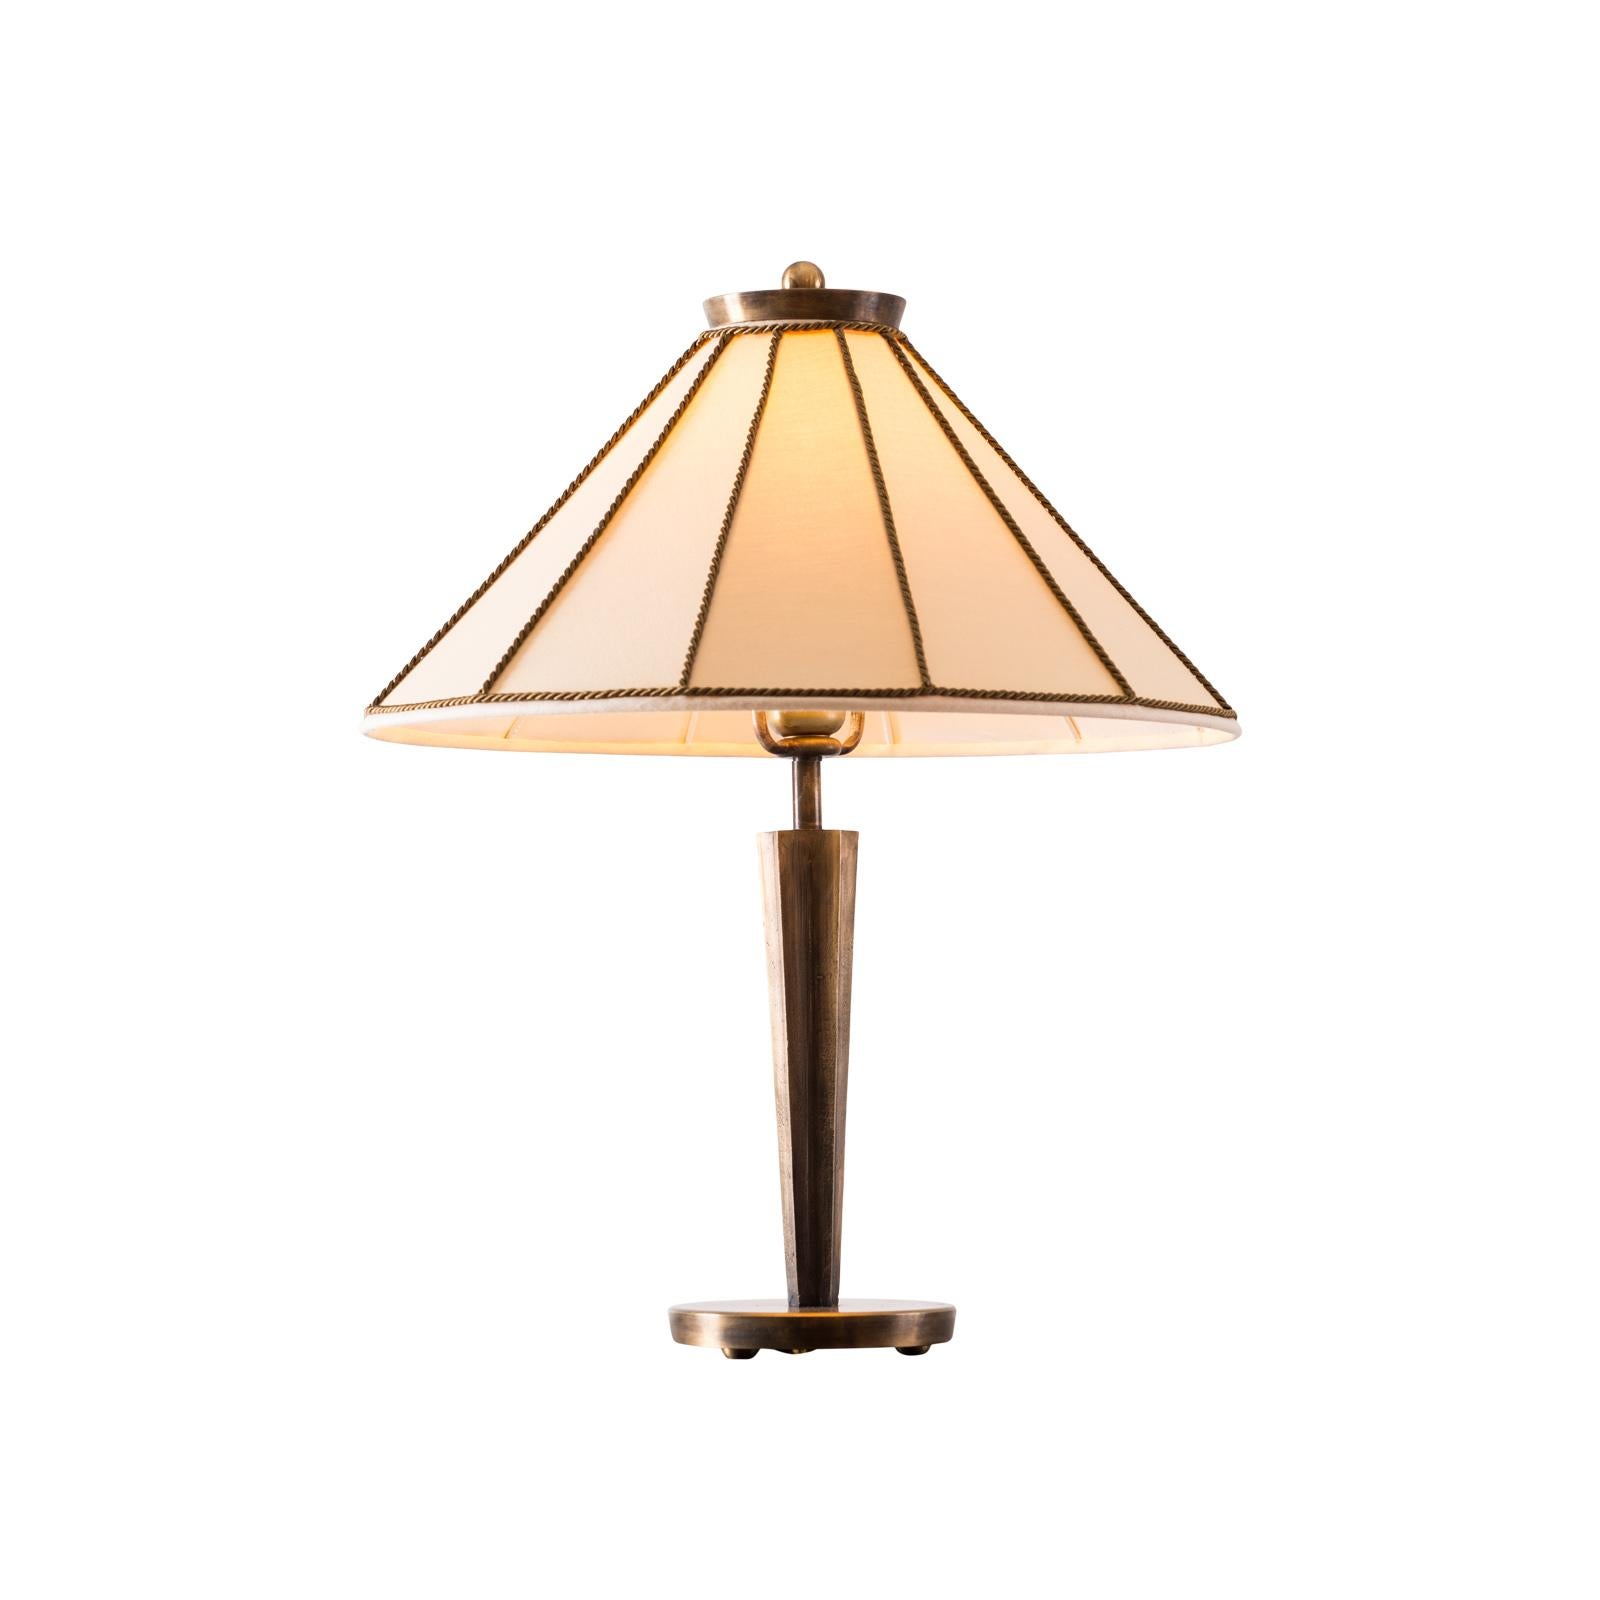 Austrian Josef Hoffmann & Wiener Werkstaette Jugendstil Table Lamp Re Edition For Sale